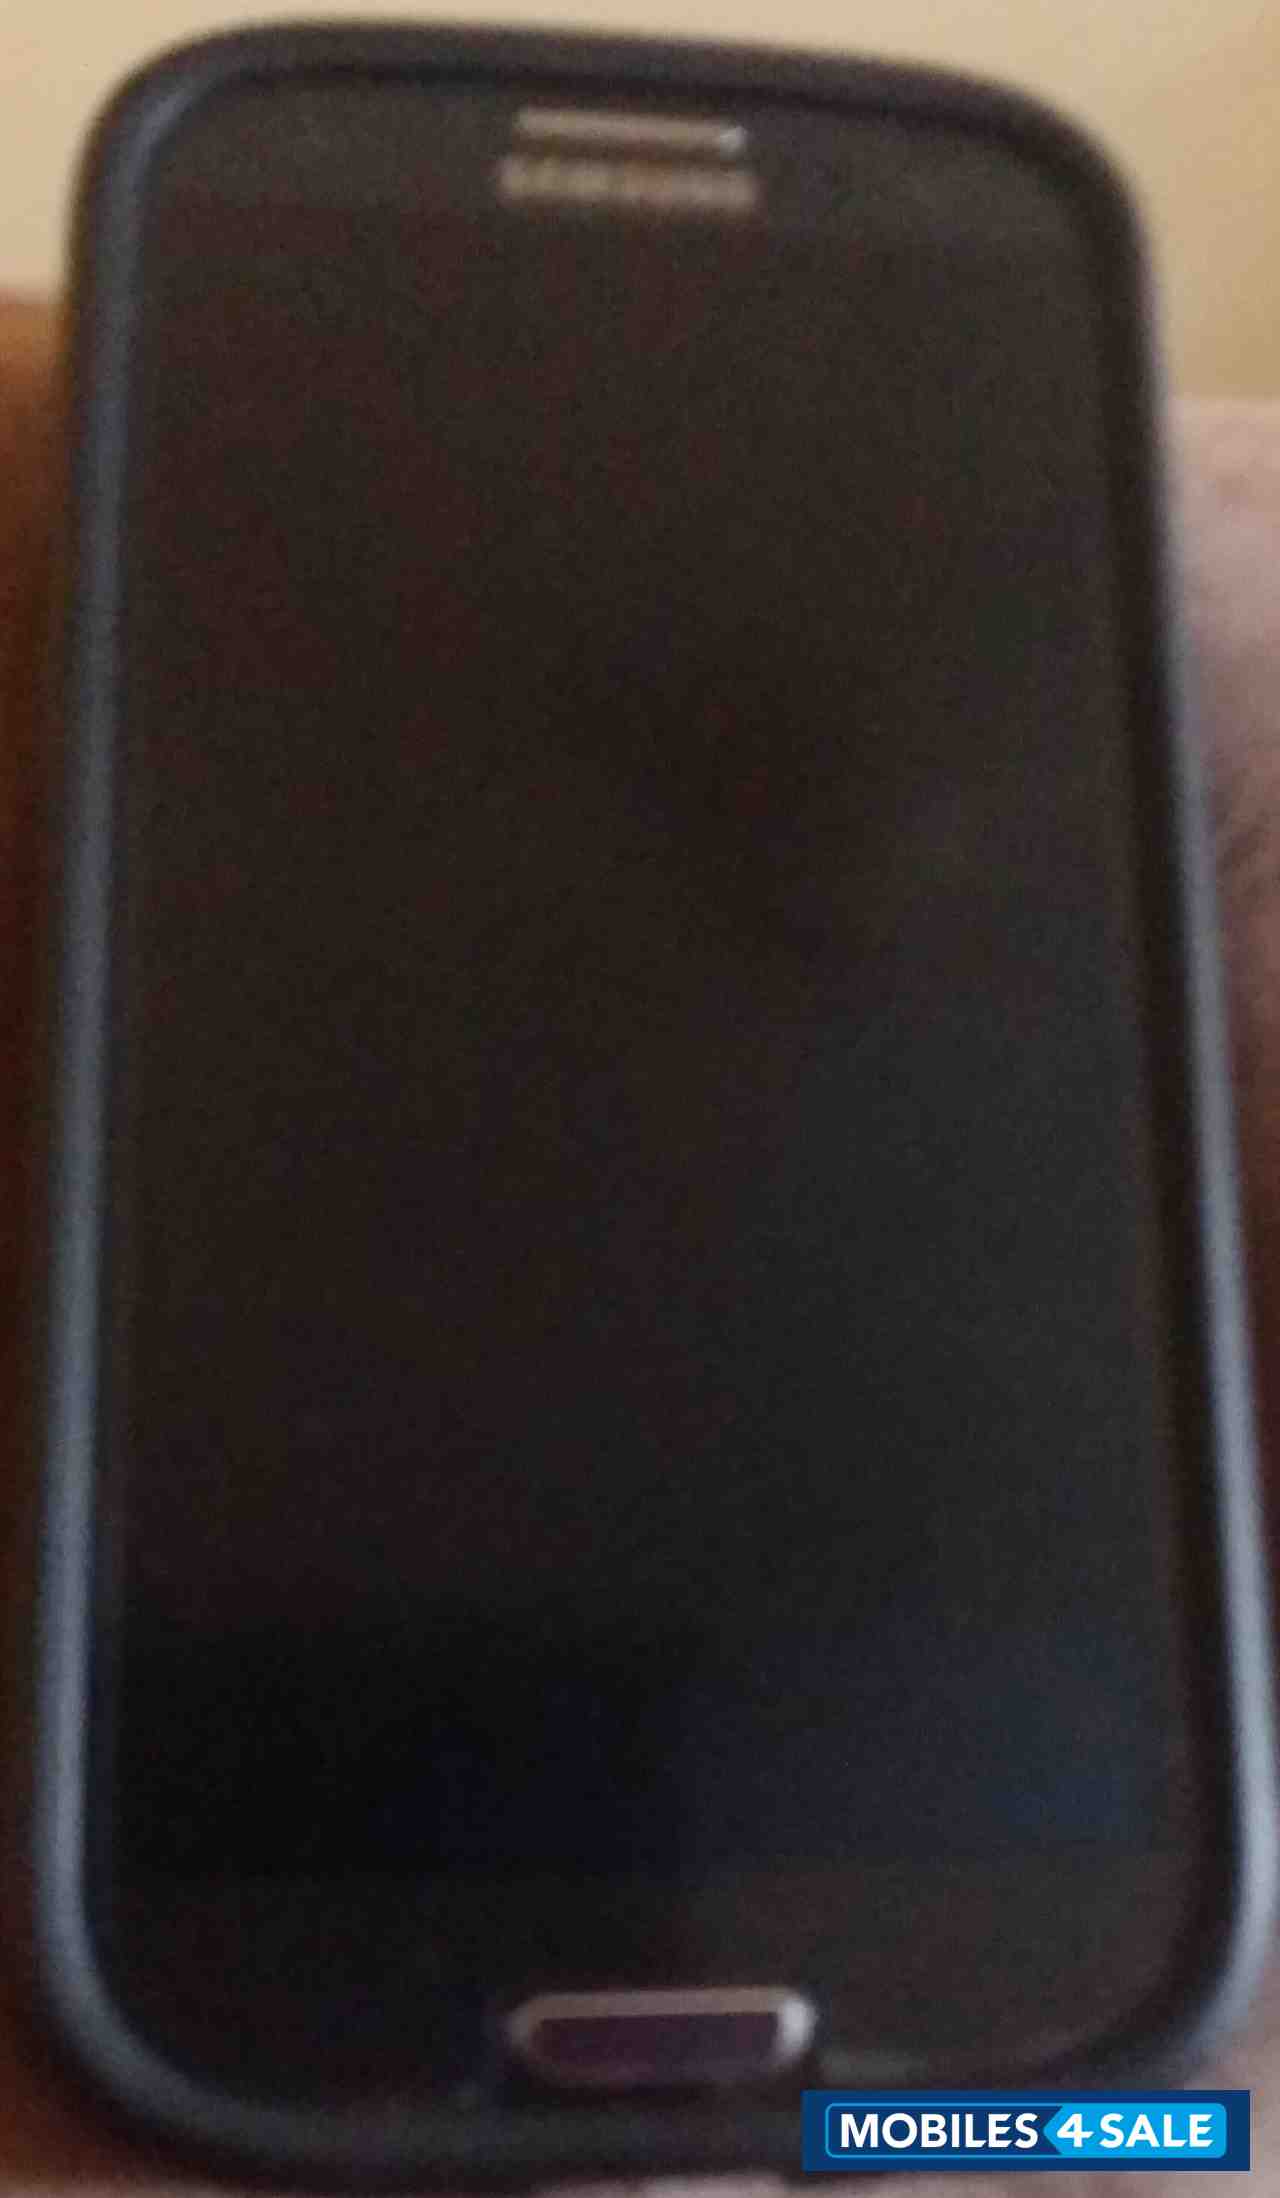 Black Samsung S3100